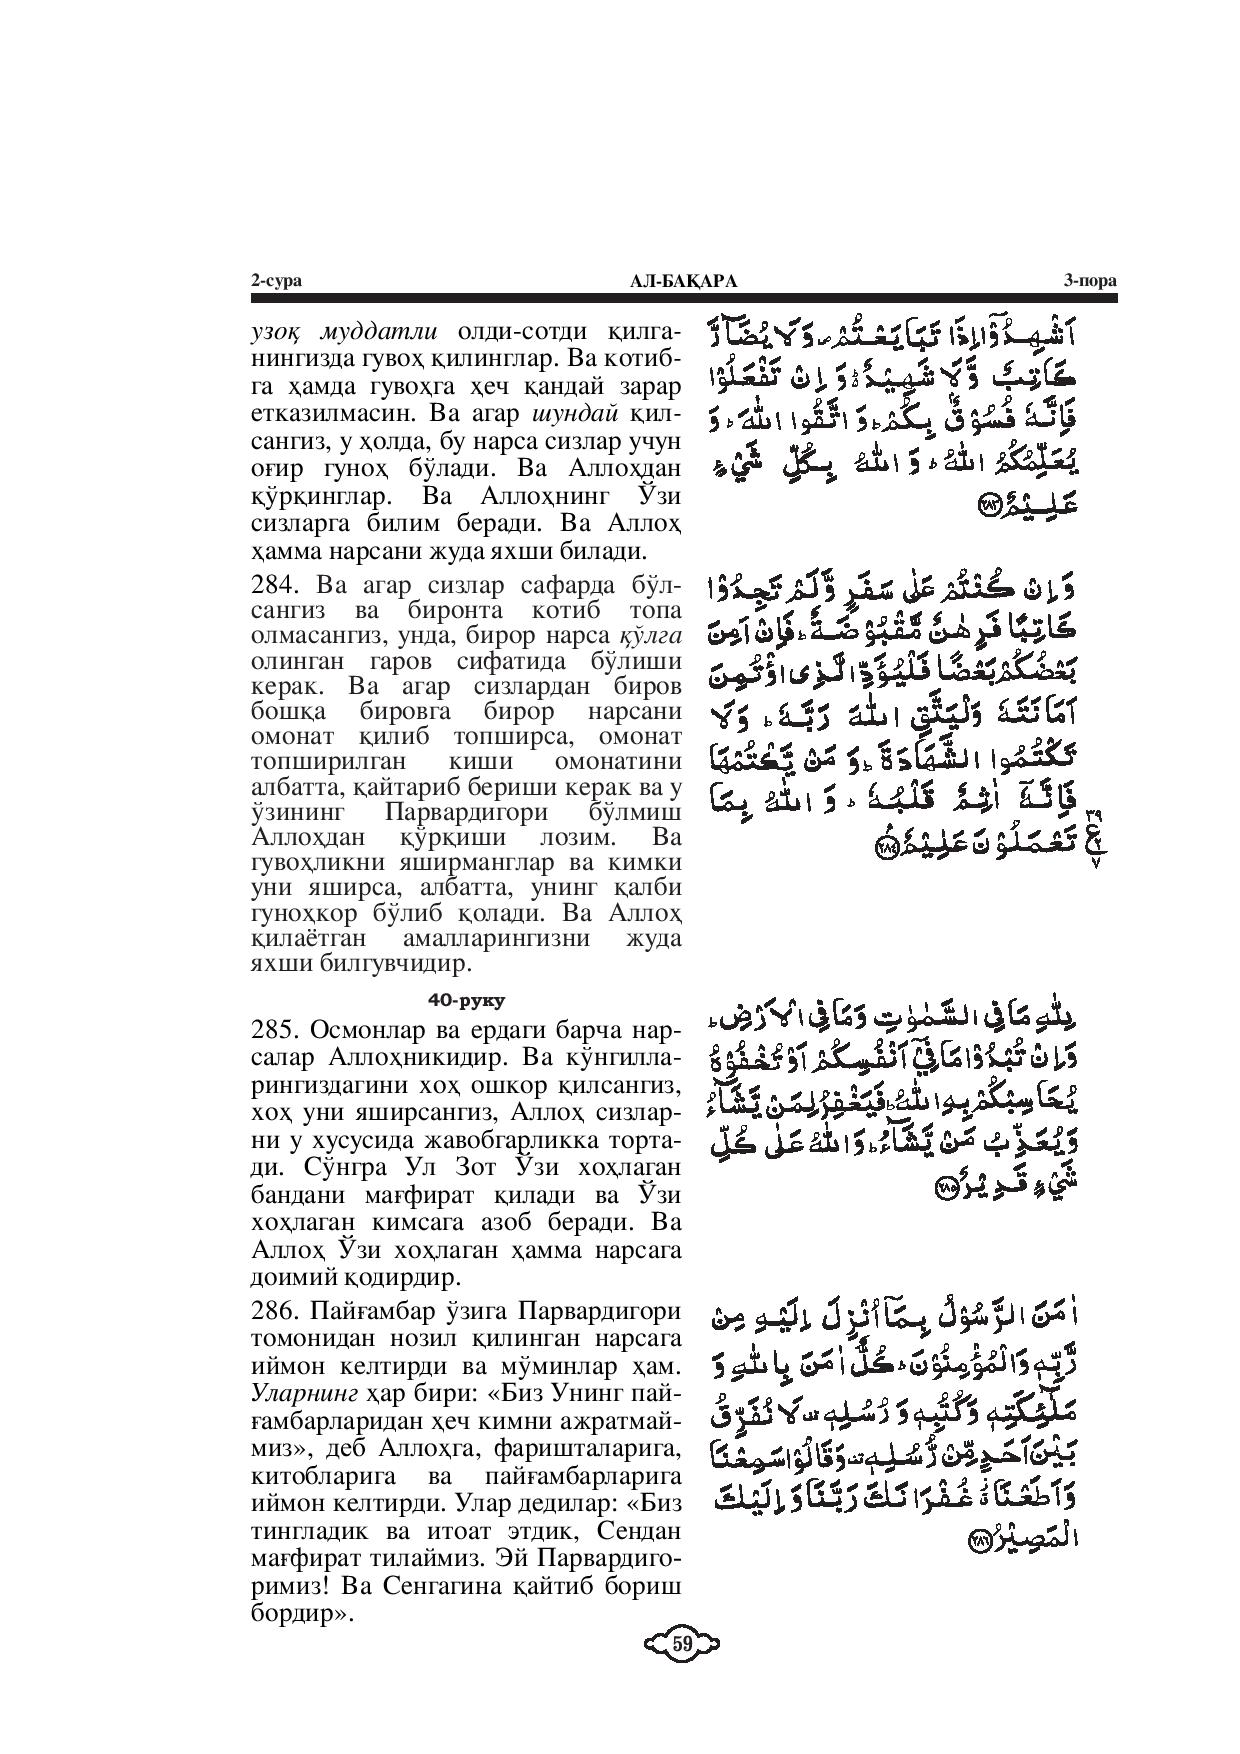 002-al-baqarah-page-057